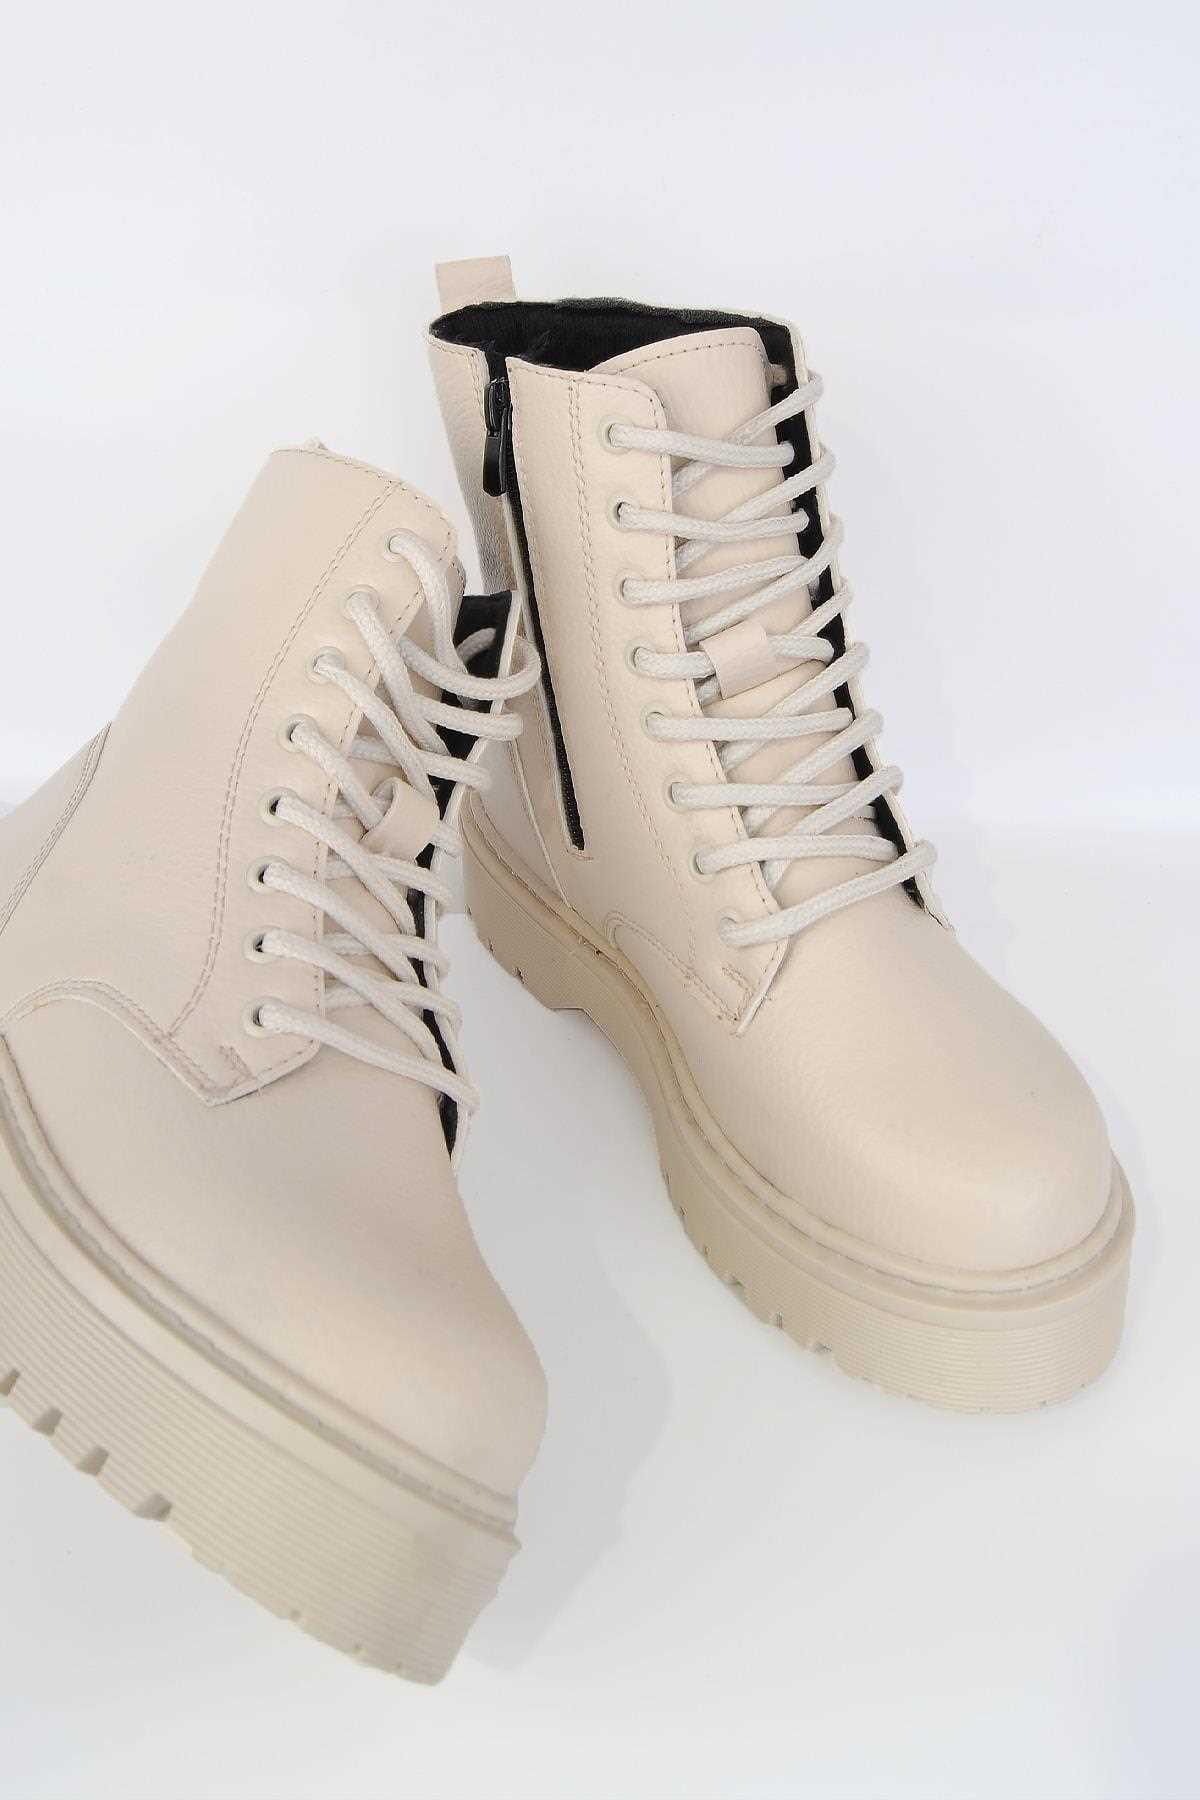 قیمت بوت چرم مصنوعی زنانه ارزان زیبا şng ayakkabı BEJ-BASKILI ty411446329